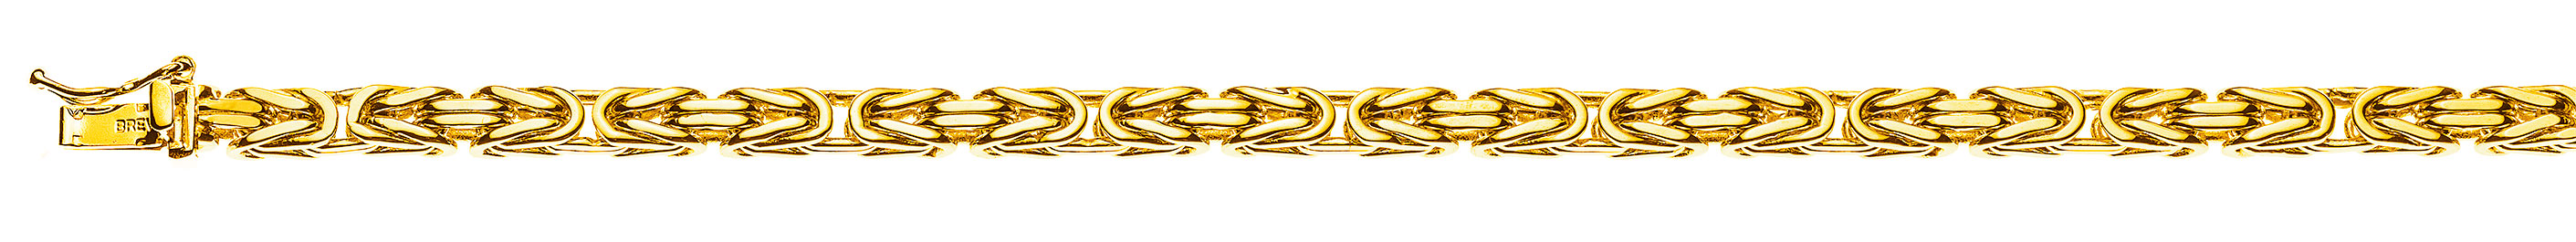 AURONOS Prestige Necklace yellow gold 18K king chain 45cm 4mm